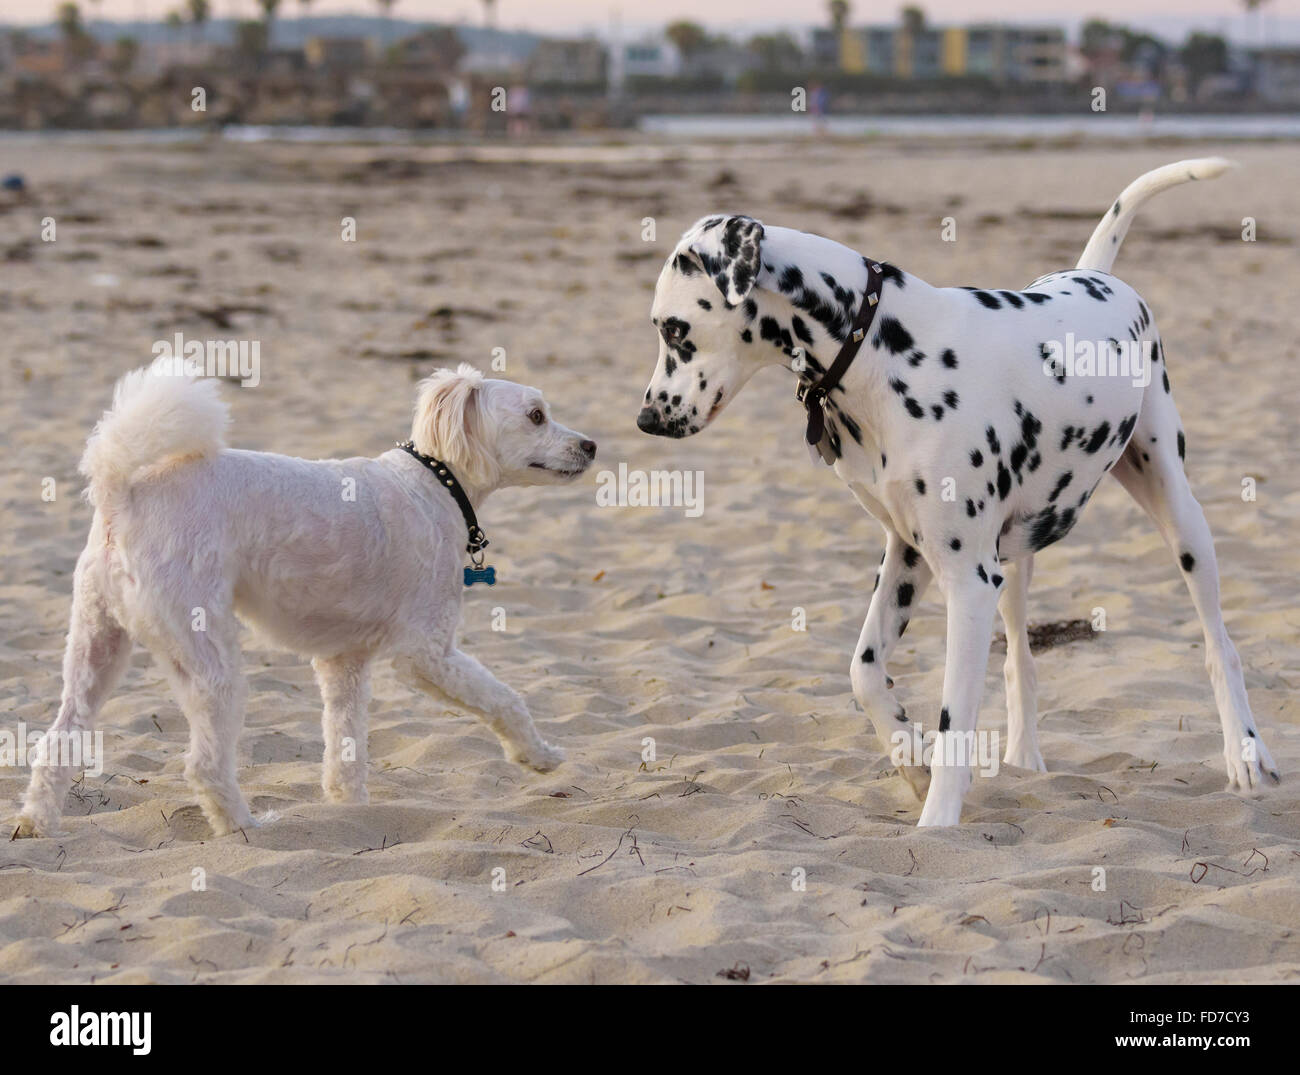 Dalmation dog greets another dog at Ocean Beach, CA shoreline Stock Photo